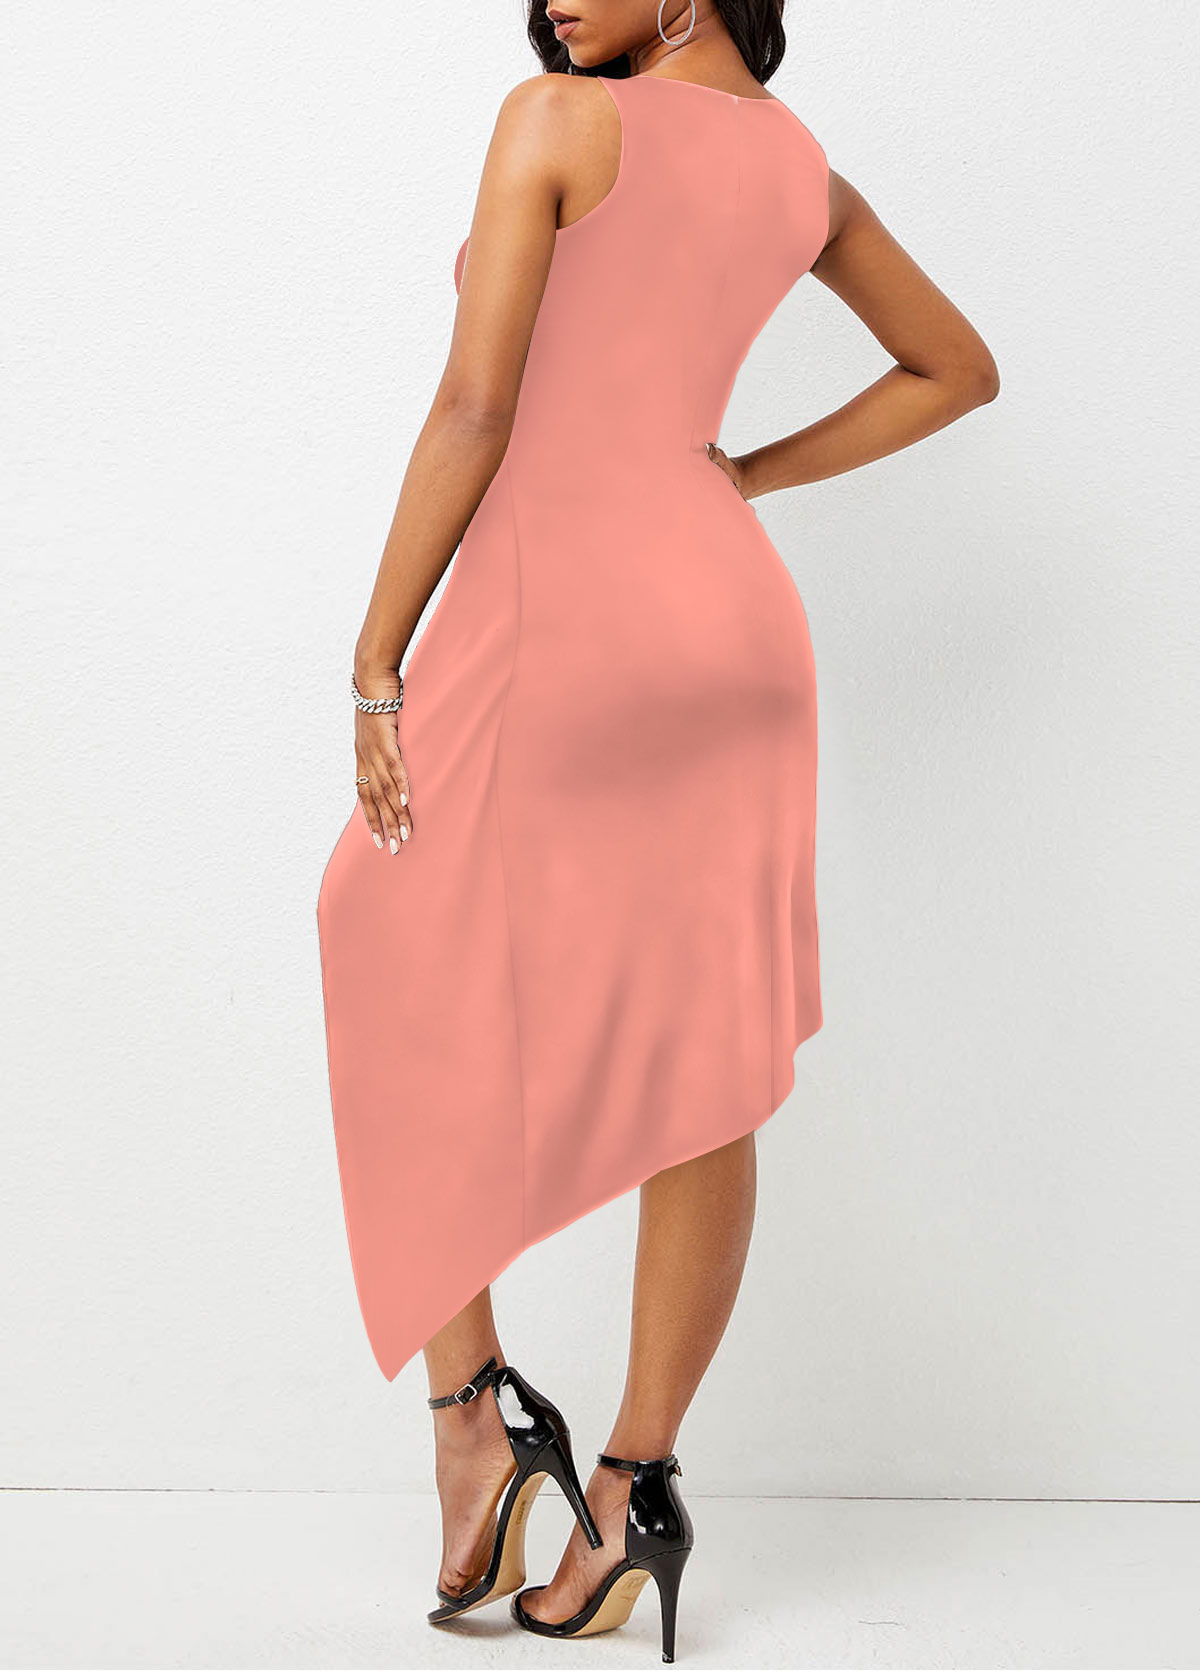 Dusty Pink Twist Floral Print Sleeveless Bodycon Dress